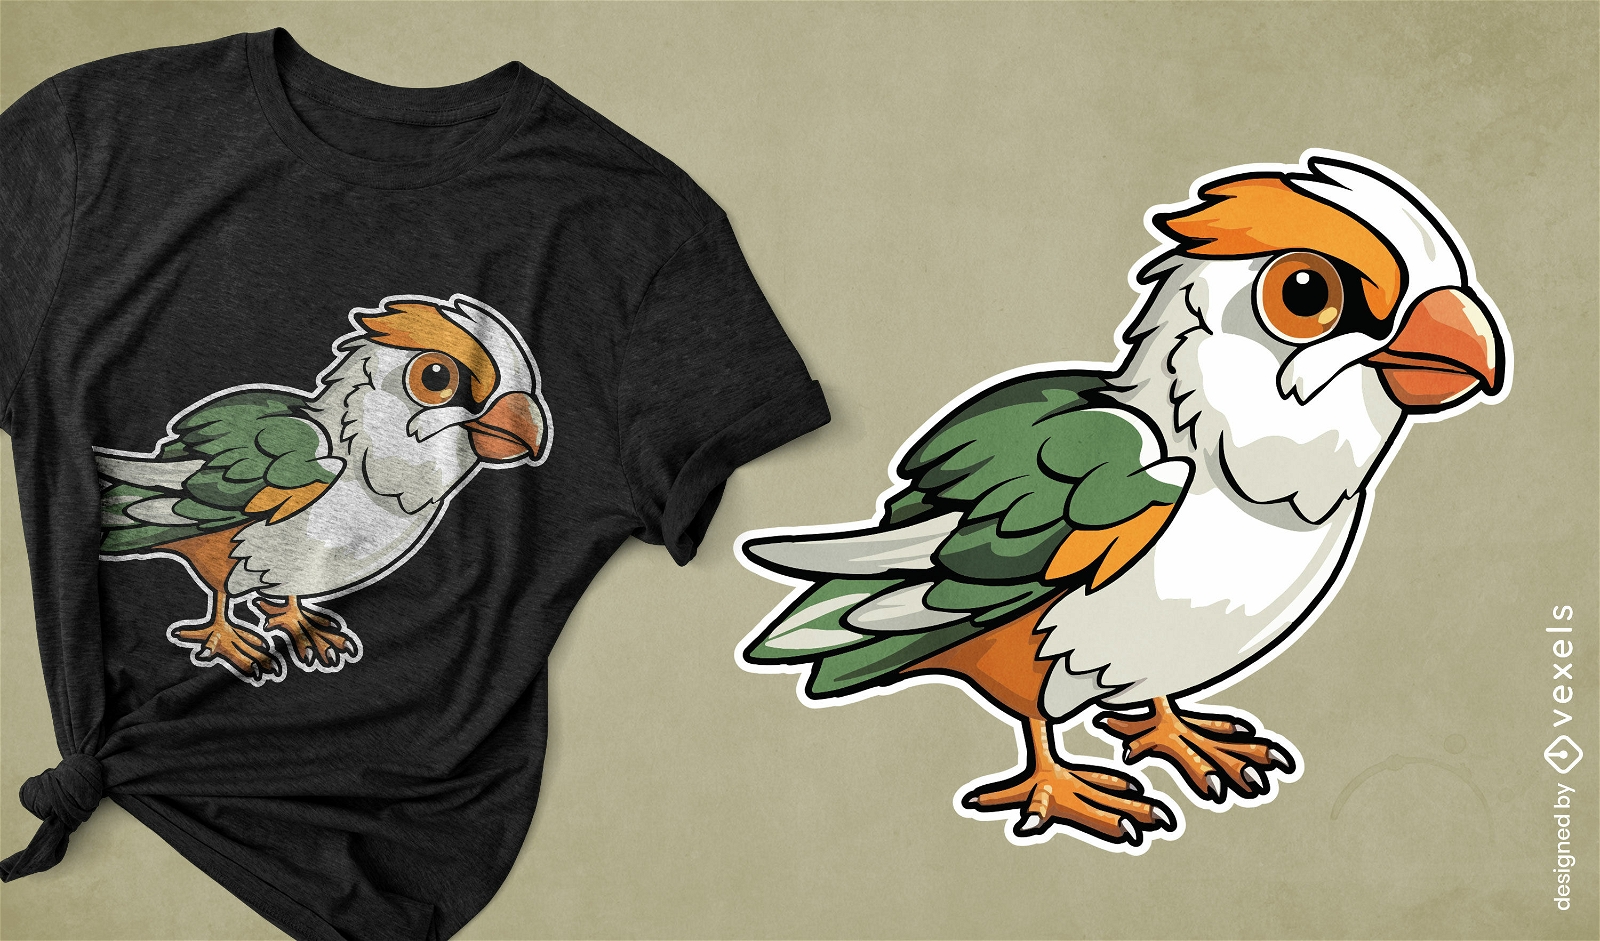 Cute orange and green bird t-shirt design